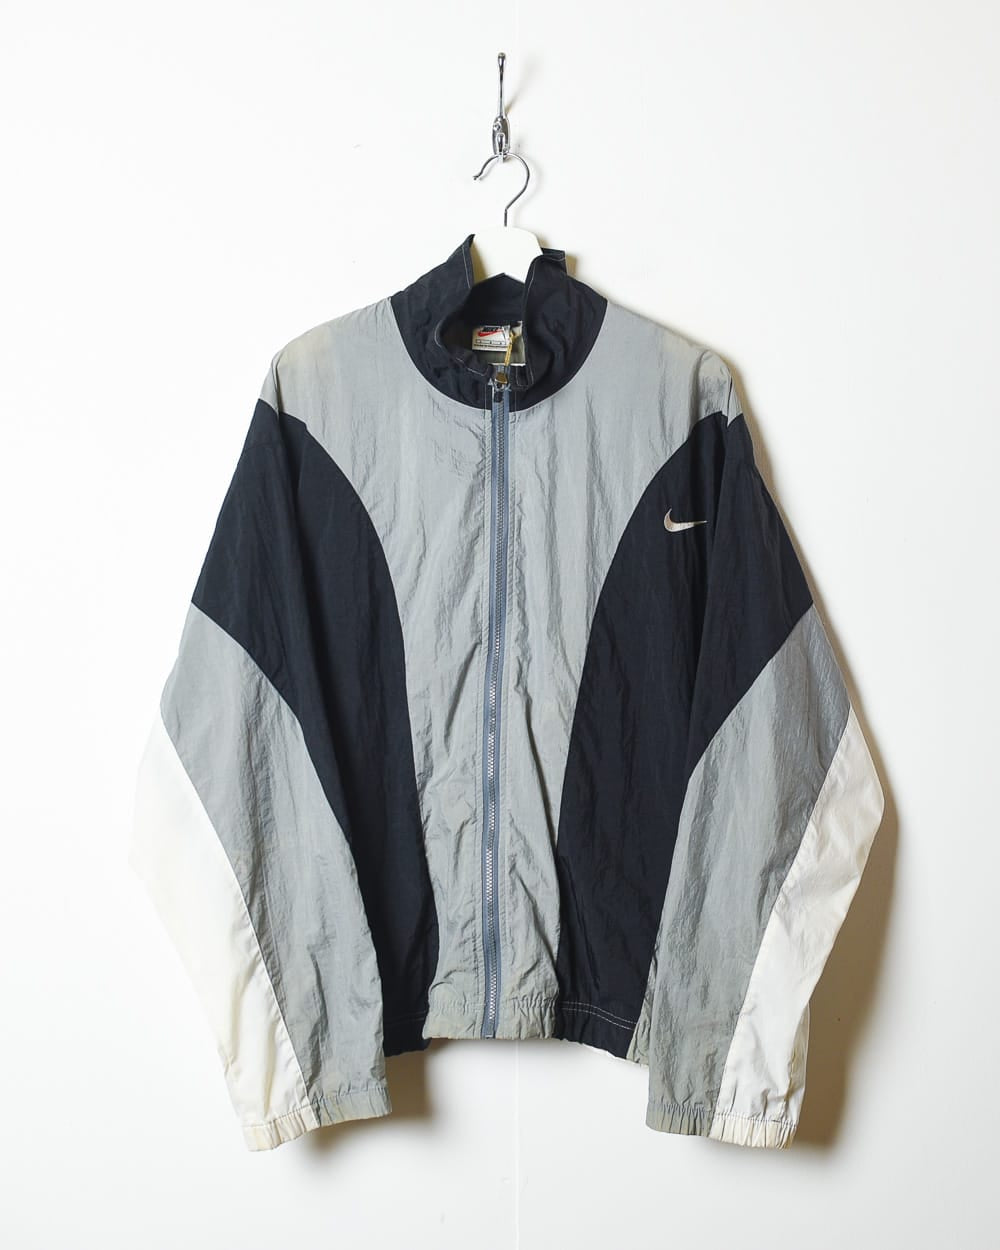 Grey Nike Windbreaker Jacket - Large